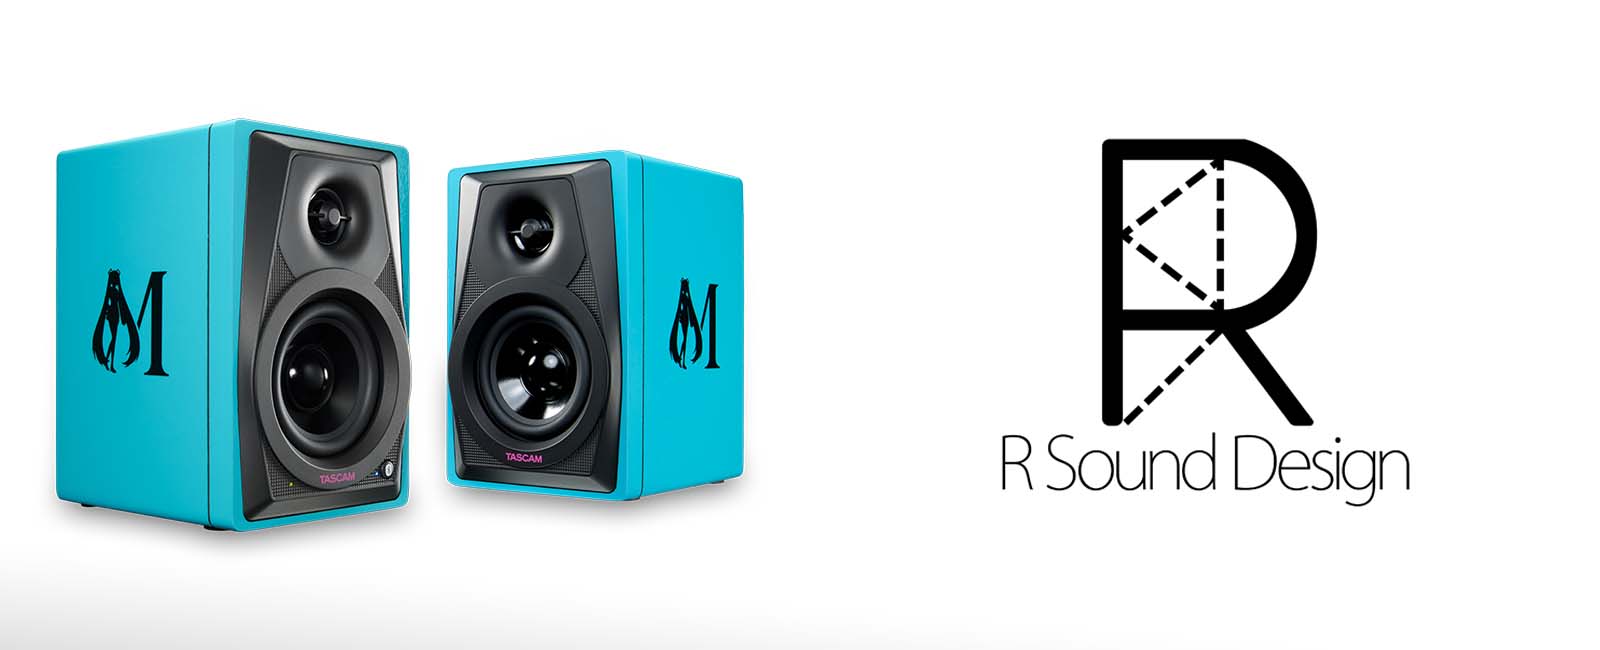 R Sound Design：機材レビュー「モニタースピーカー VL-S3BT」